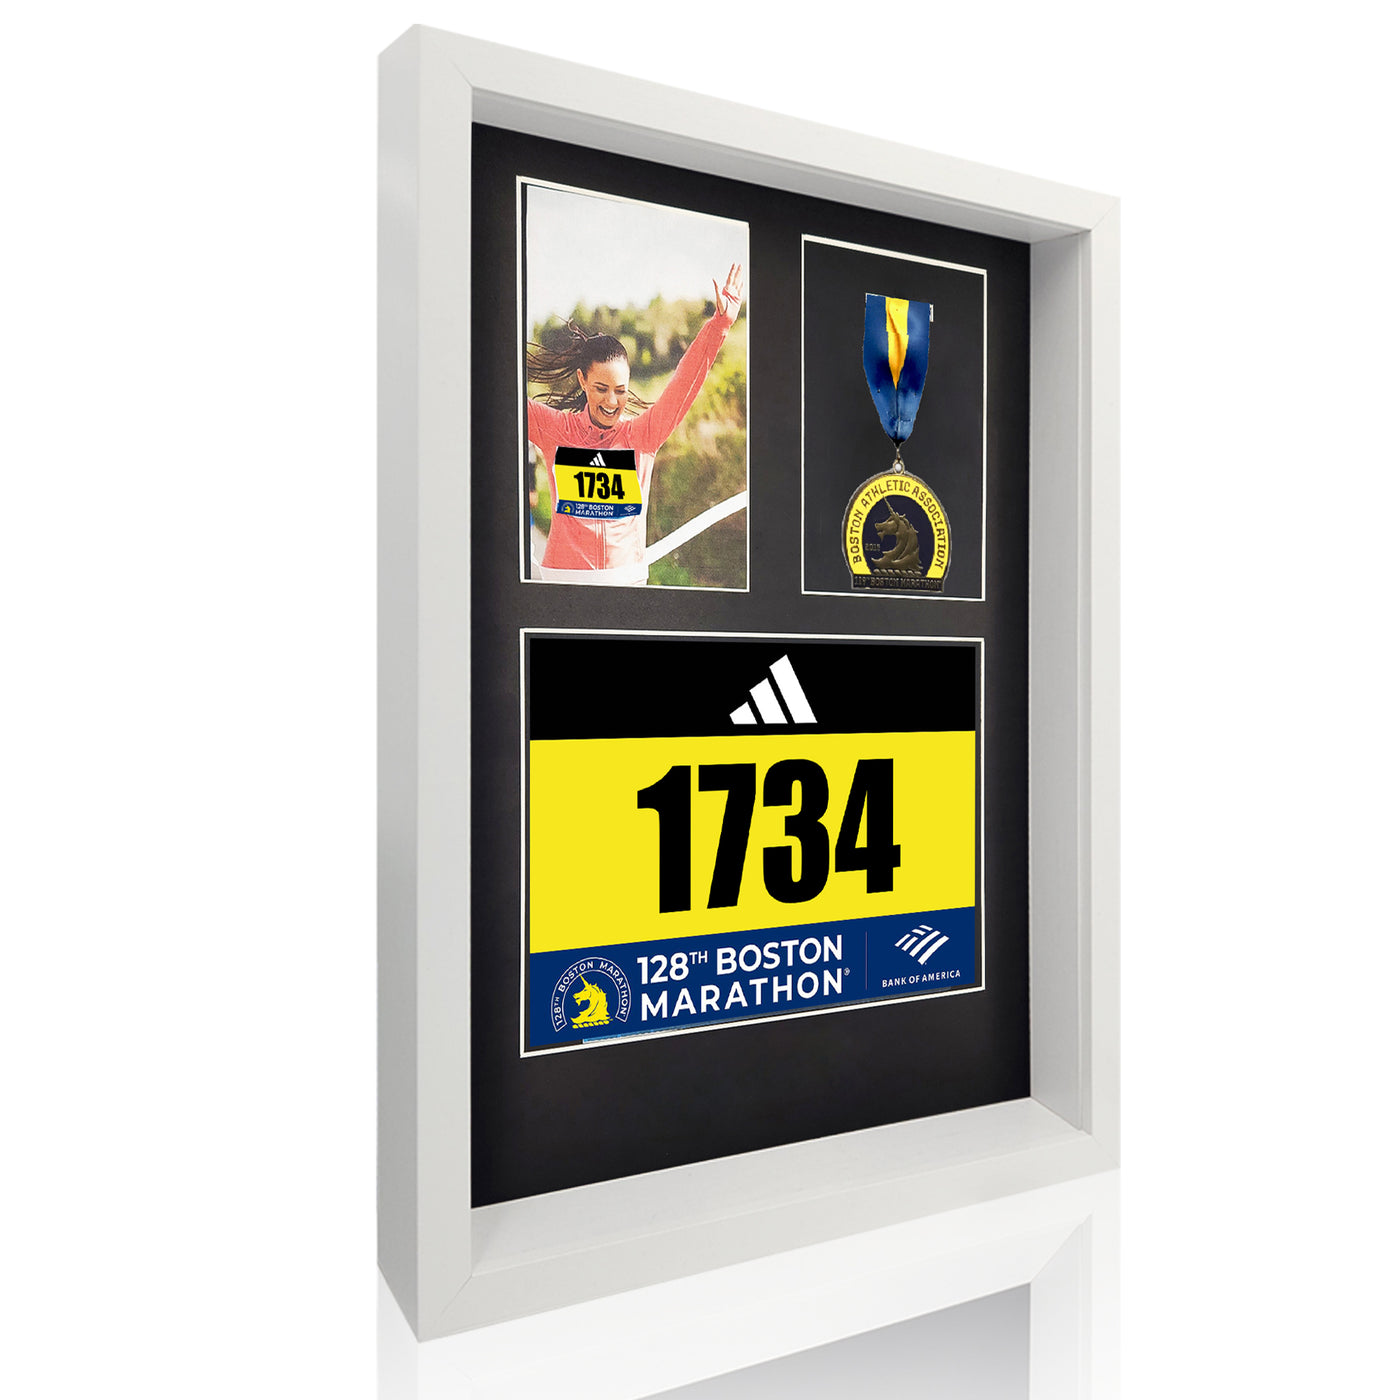 3 in 1 Shadow Box Display (Medal, Race Bibs, and Photo) – Marathon and Triathlon Display